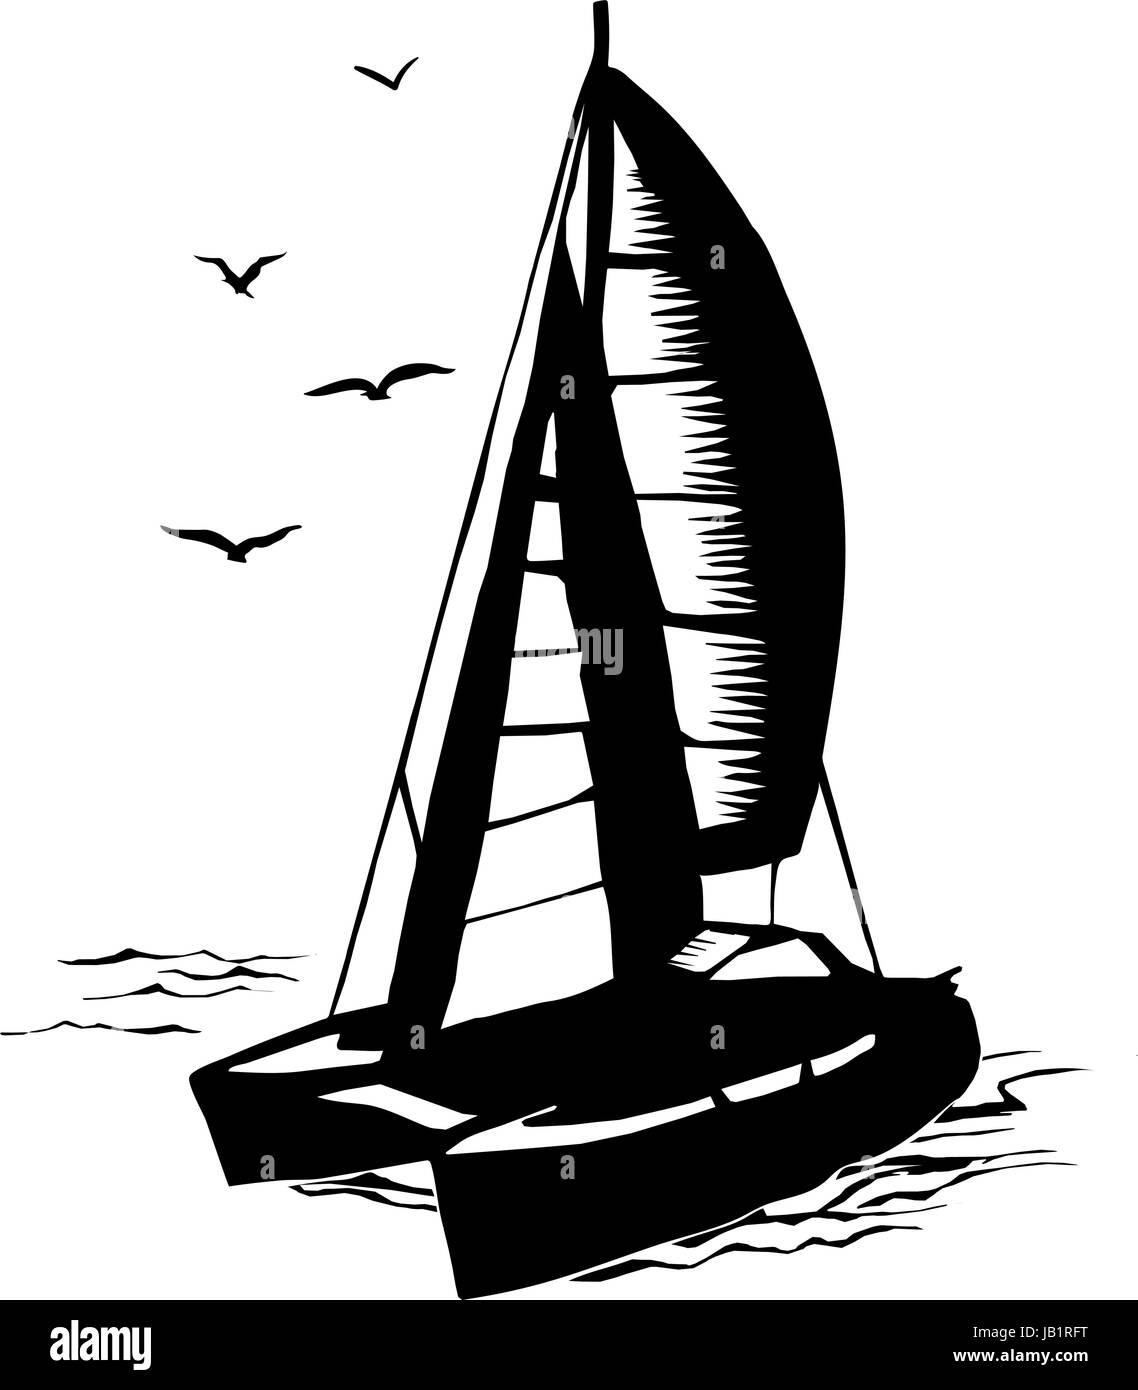 Velero catamarán silueta monocroma Ilustración del Vector